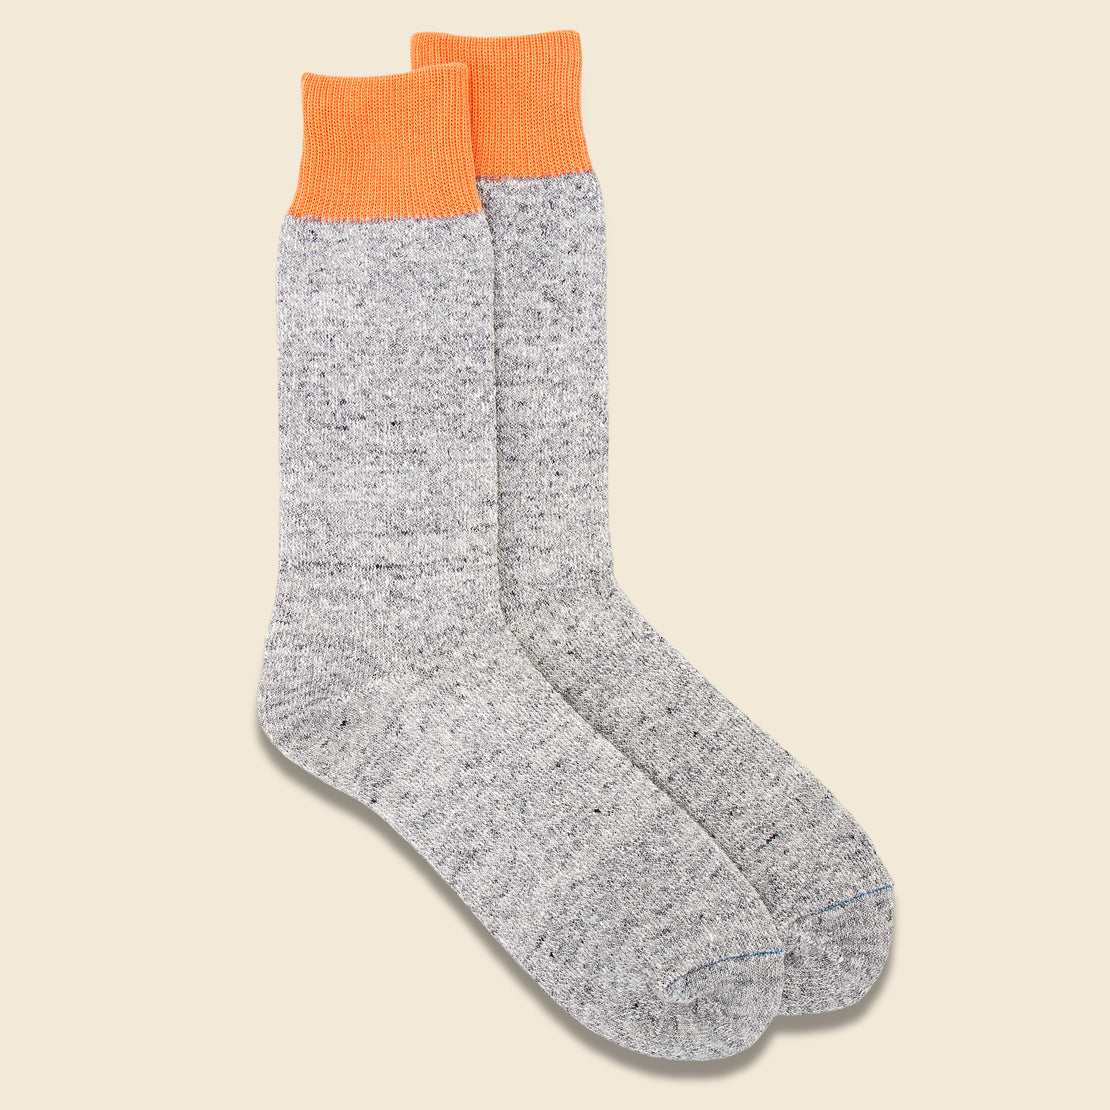 RoToTo Silk & Cotton Double Face Sock - Light Orange/Light Gray